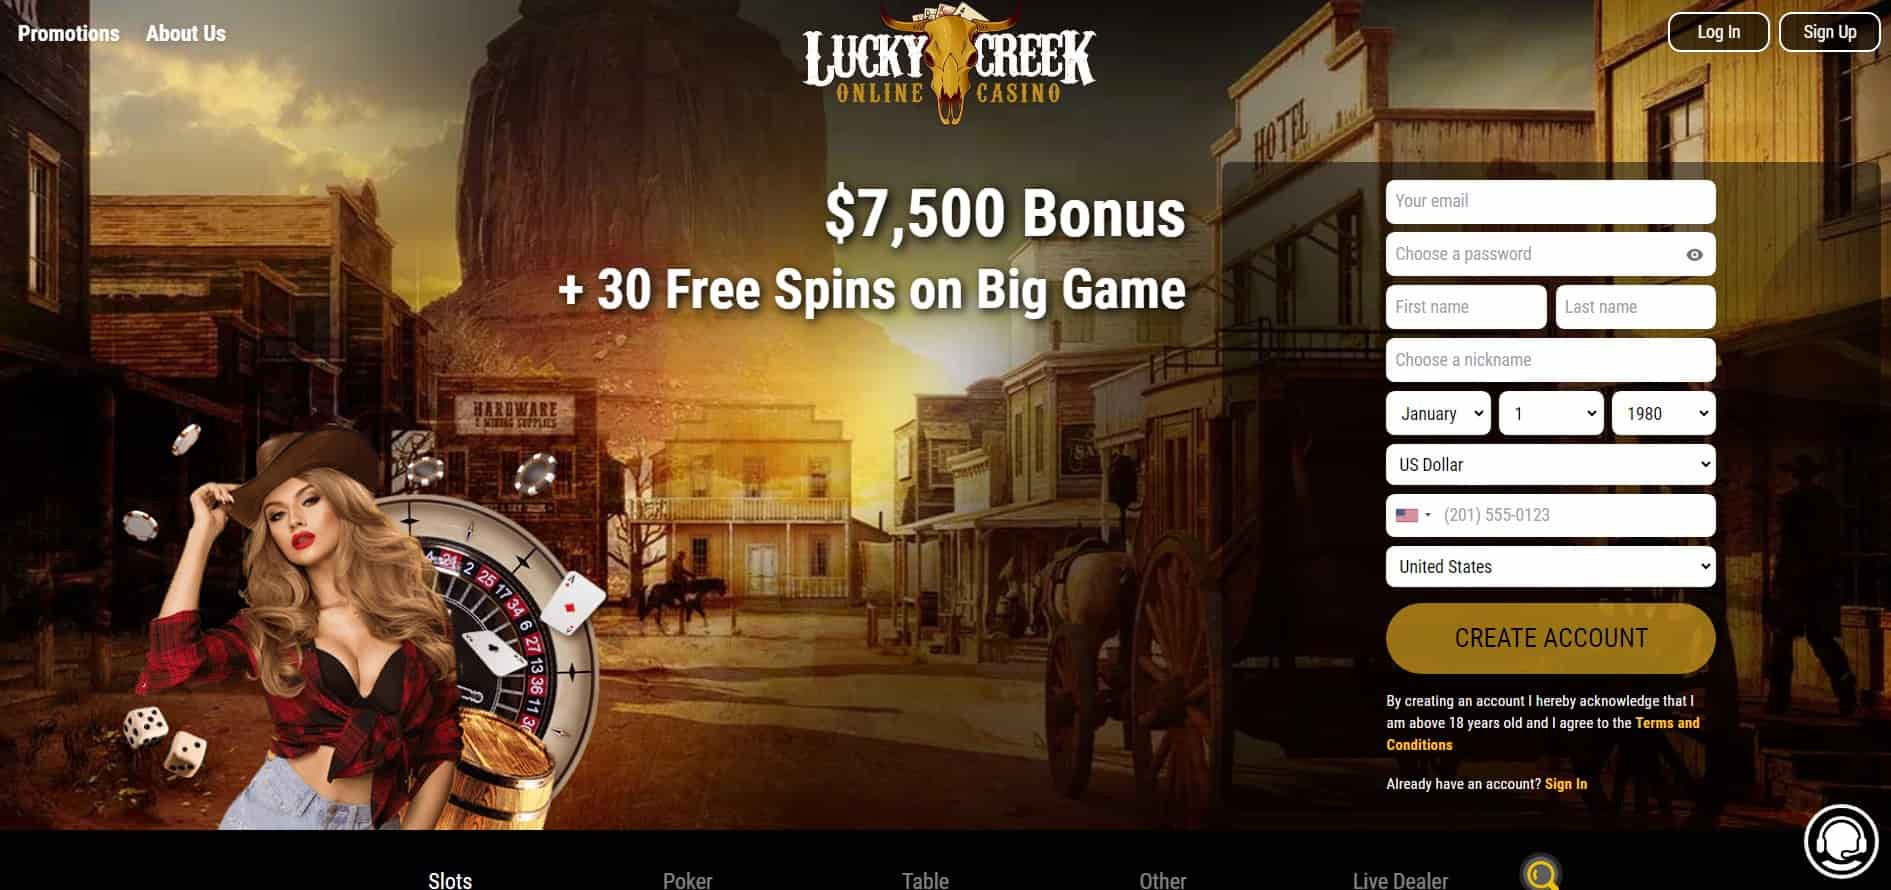 lucky creek casino homepage 